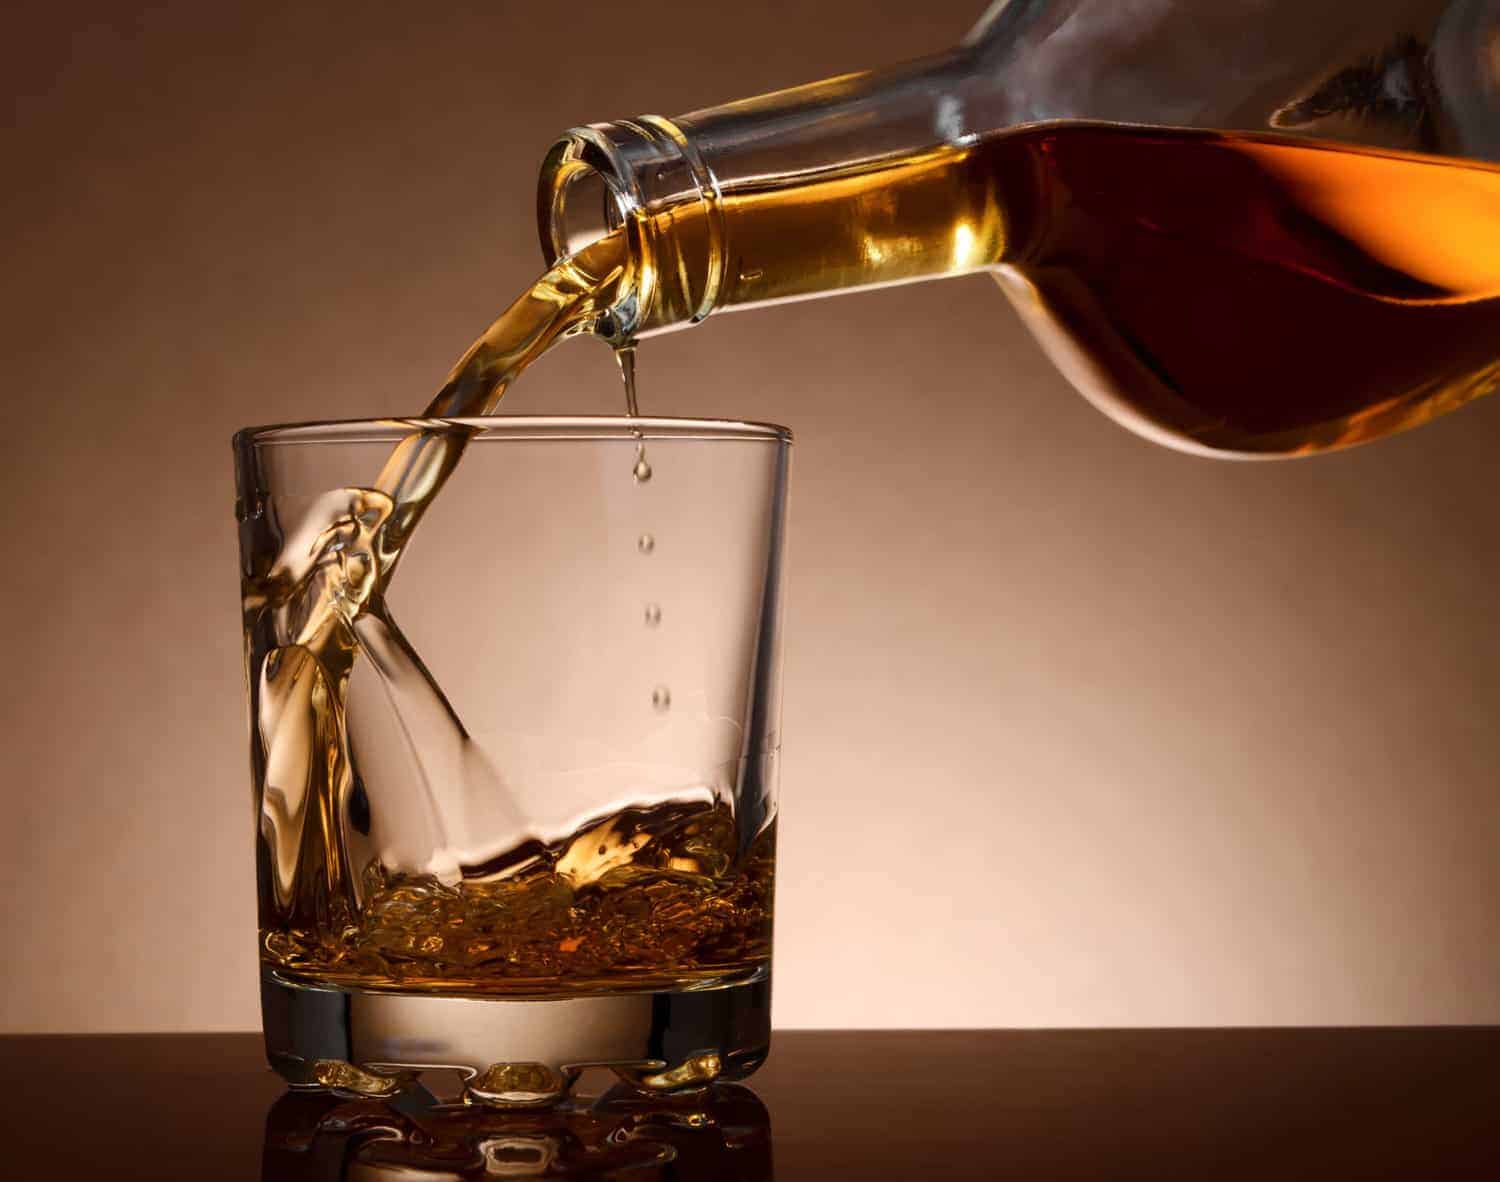 Speyside single malt Scotch whisky